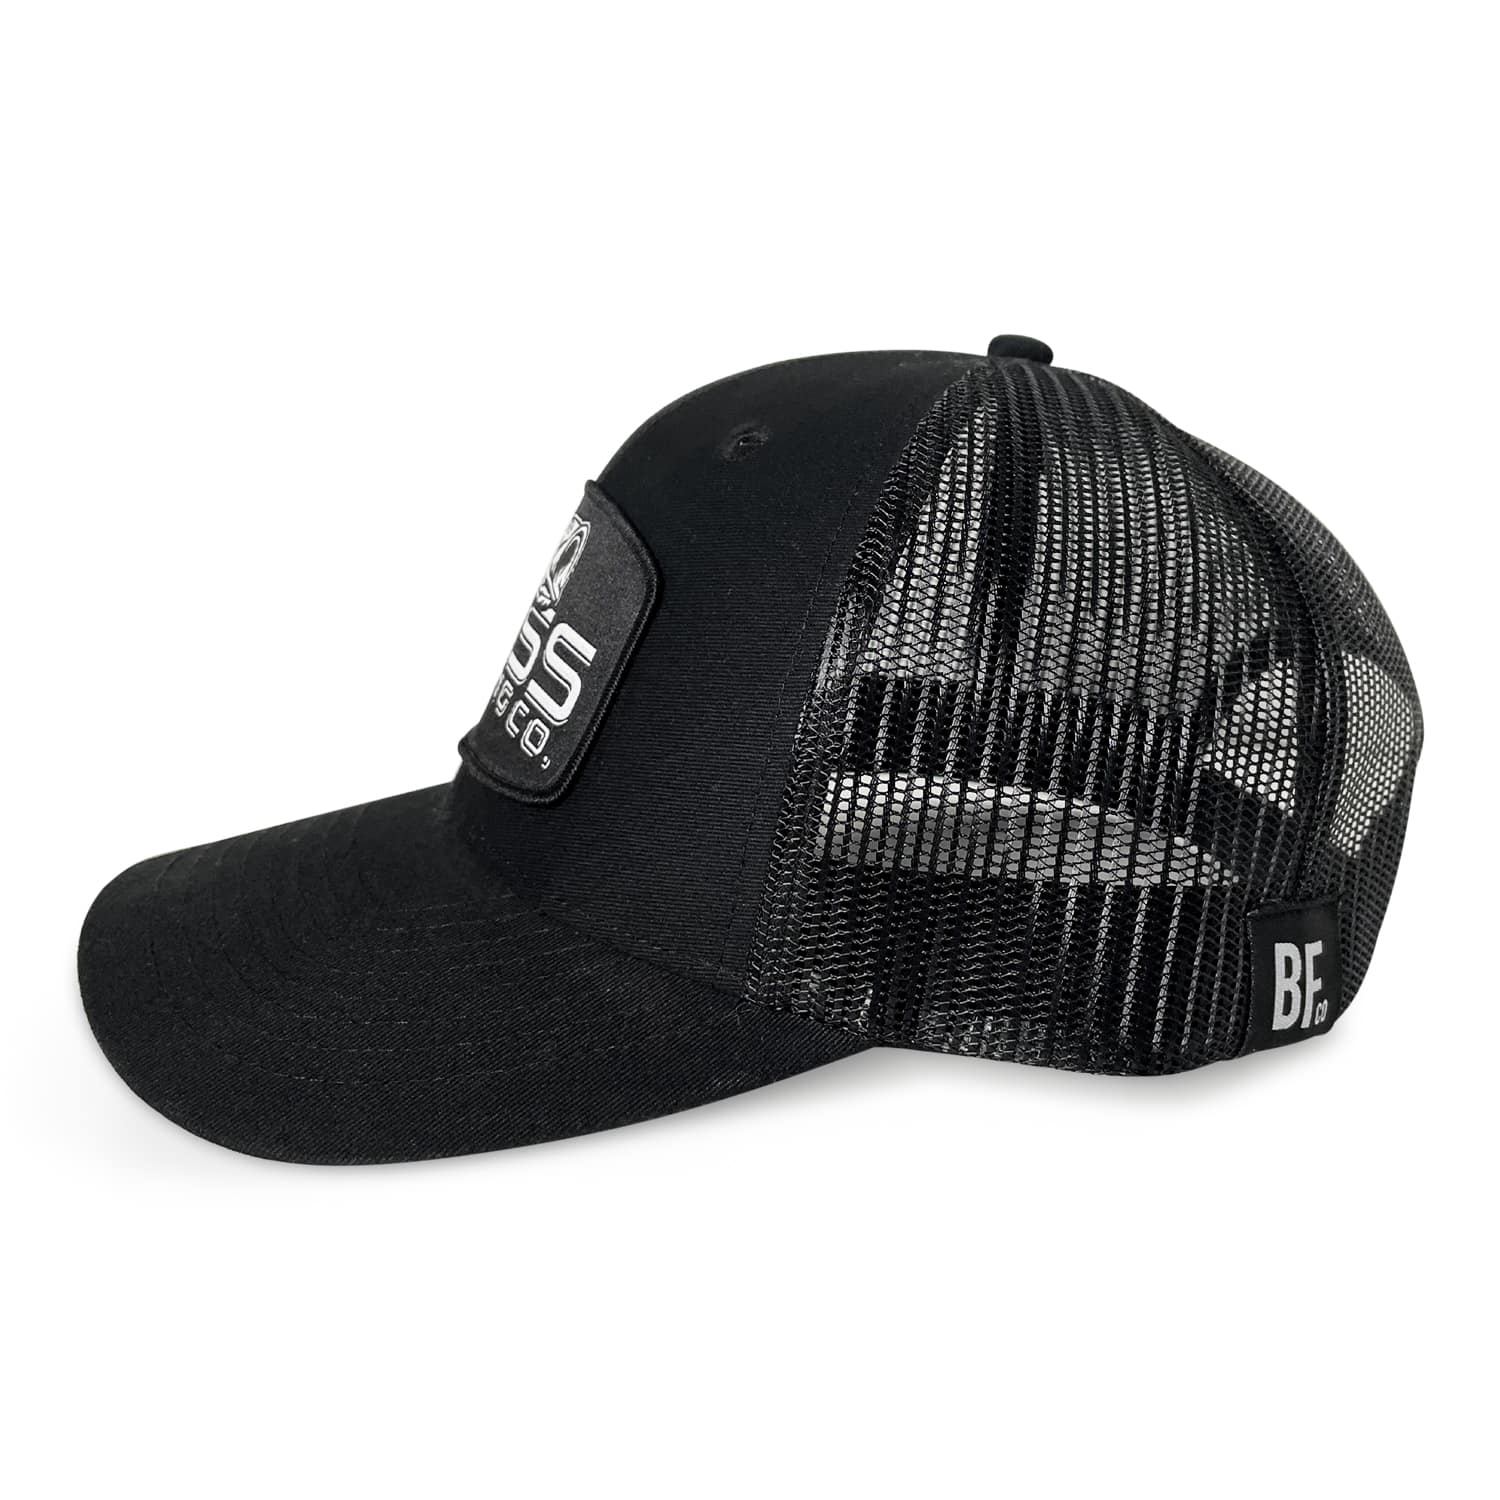 BFco Black on Black Hat Side View 